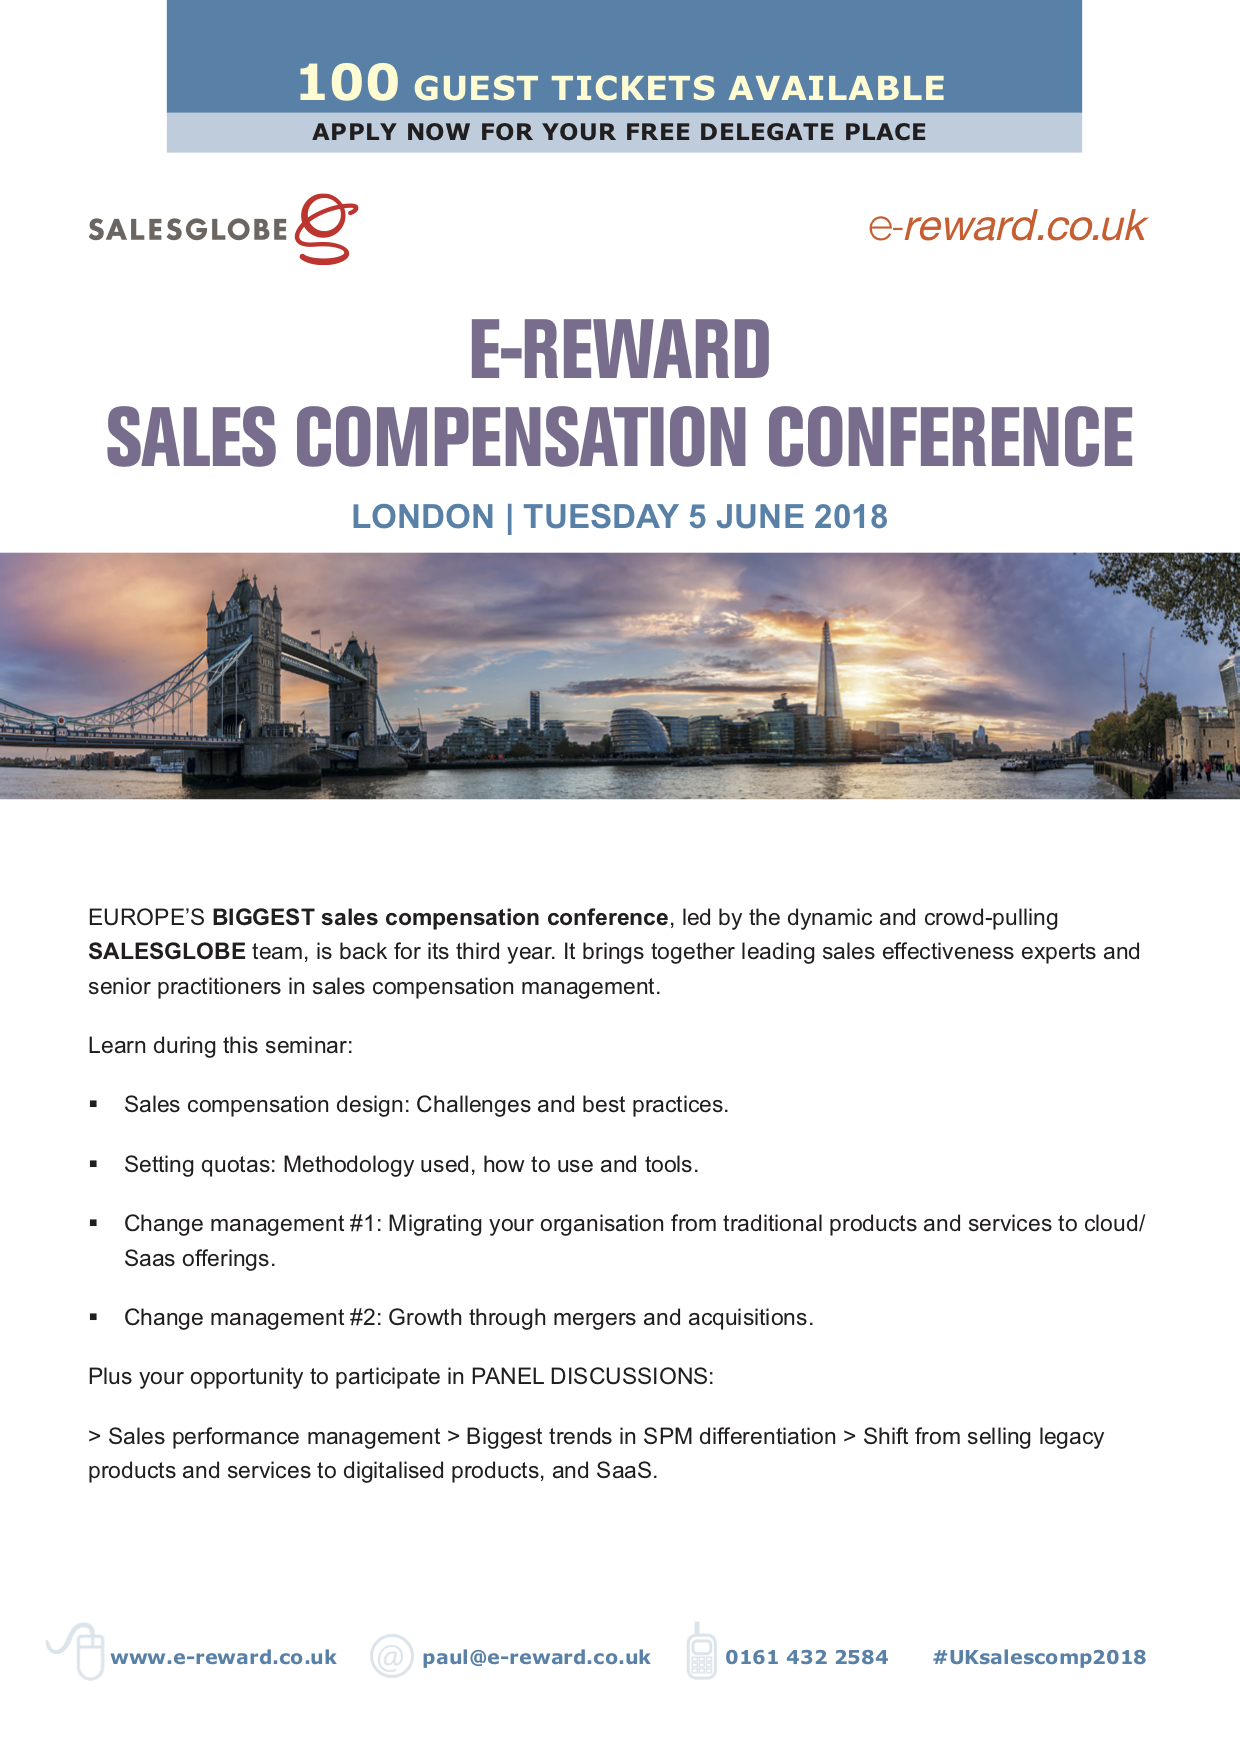 Sales Comp Conference brochure